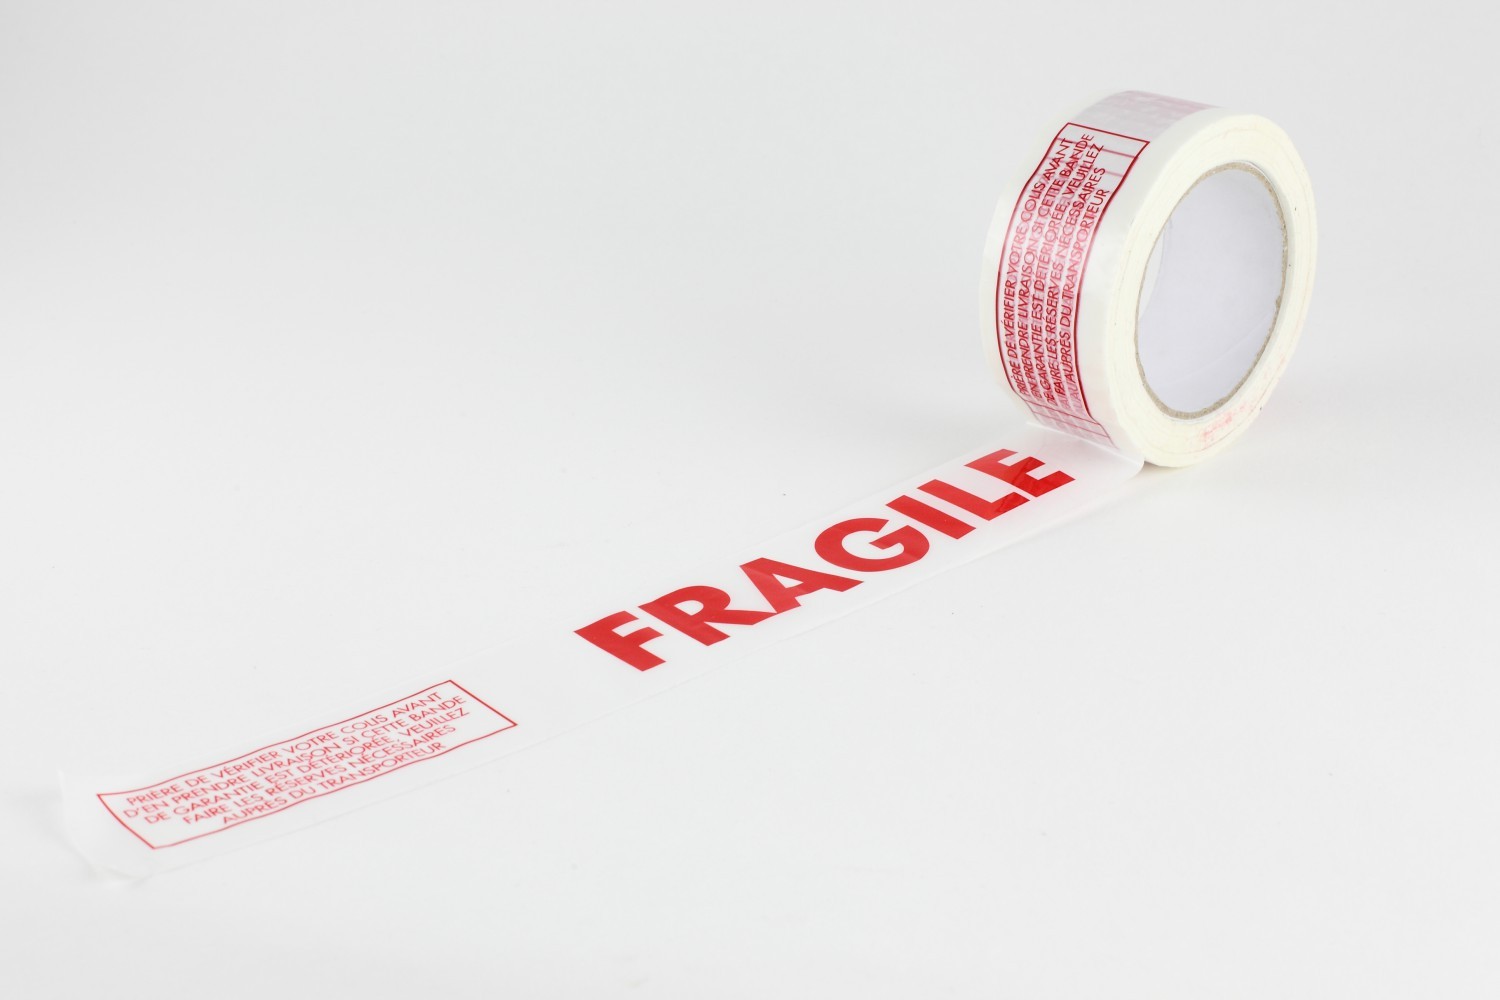 RUBAN ADHESIF Blanc Imprimé "FRAGILE" 100mètres x 5cm